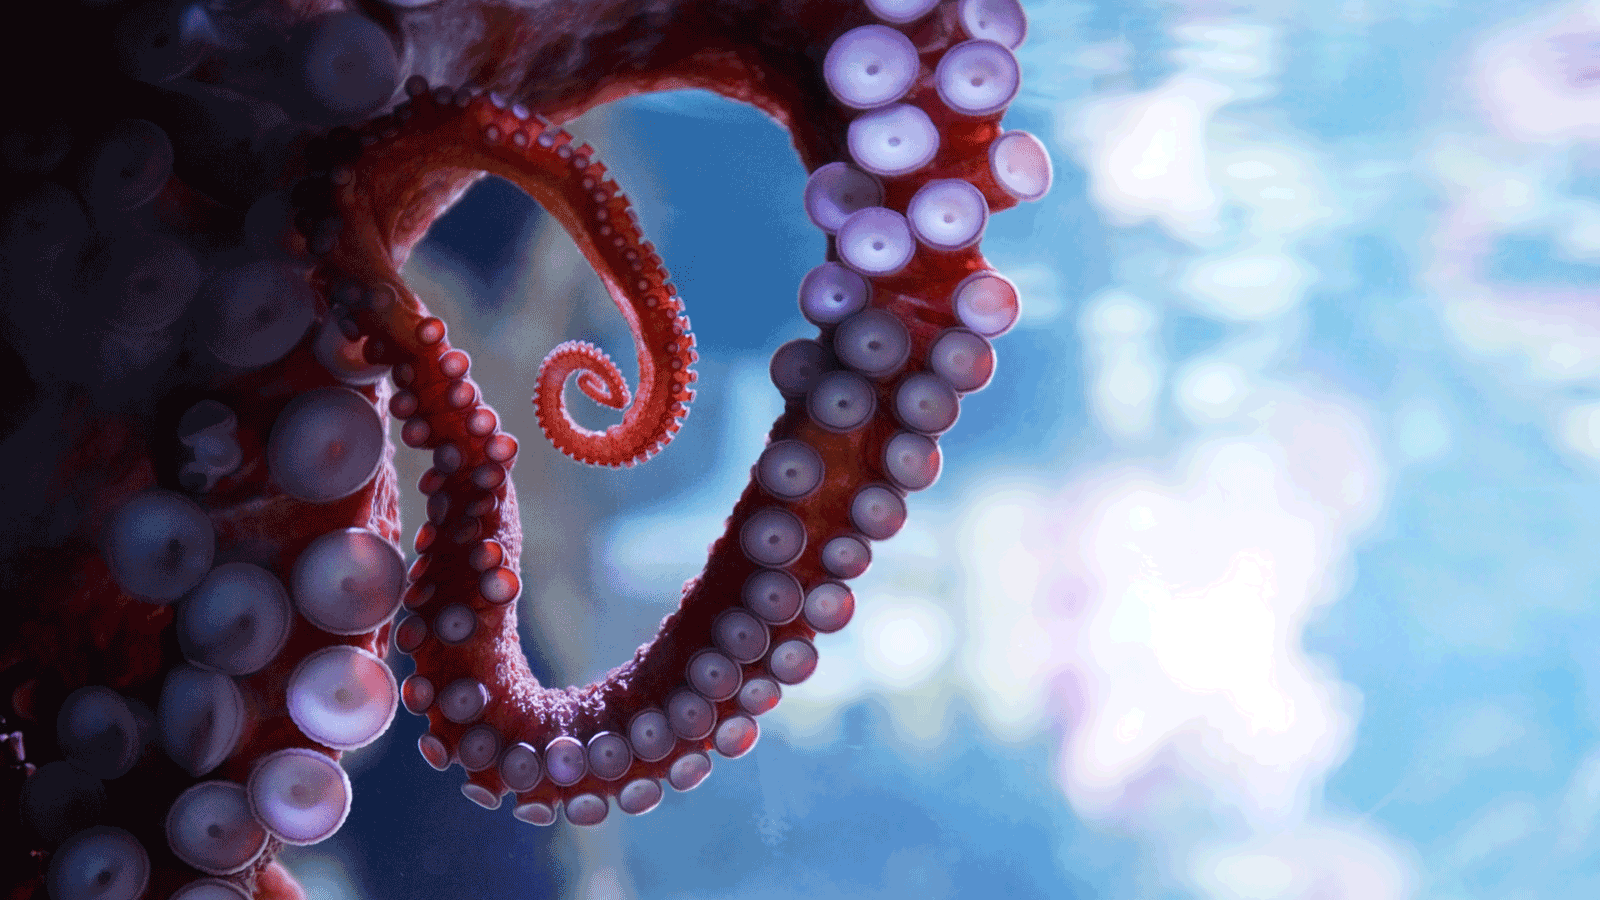 Octopus suckers inspire robotic mechanism with potential for industrial applications